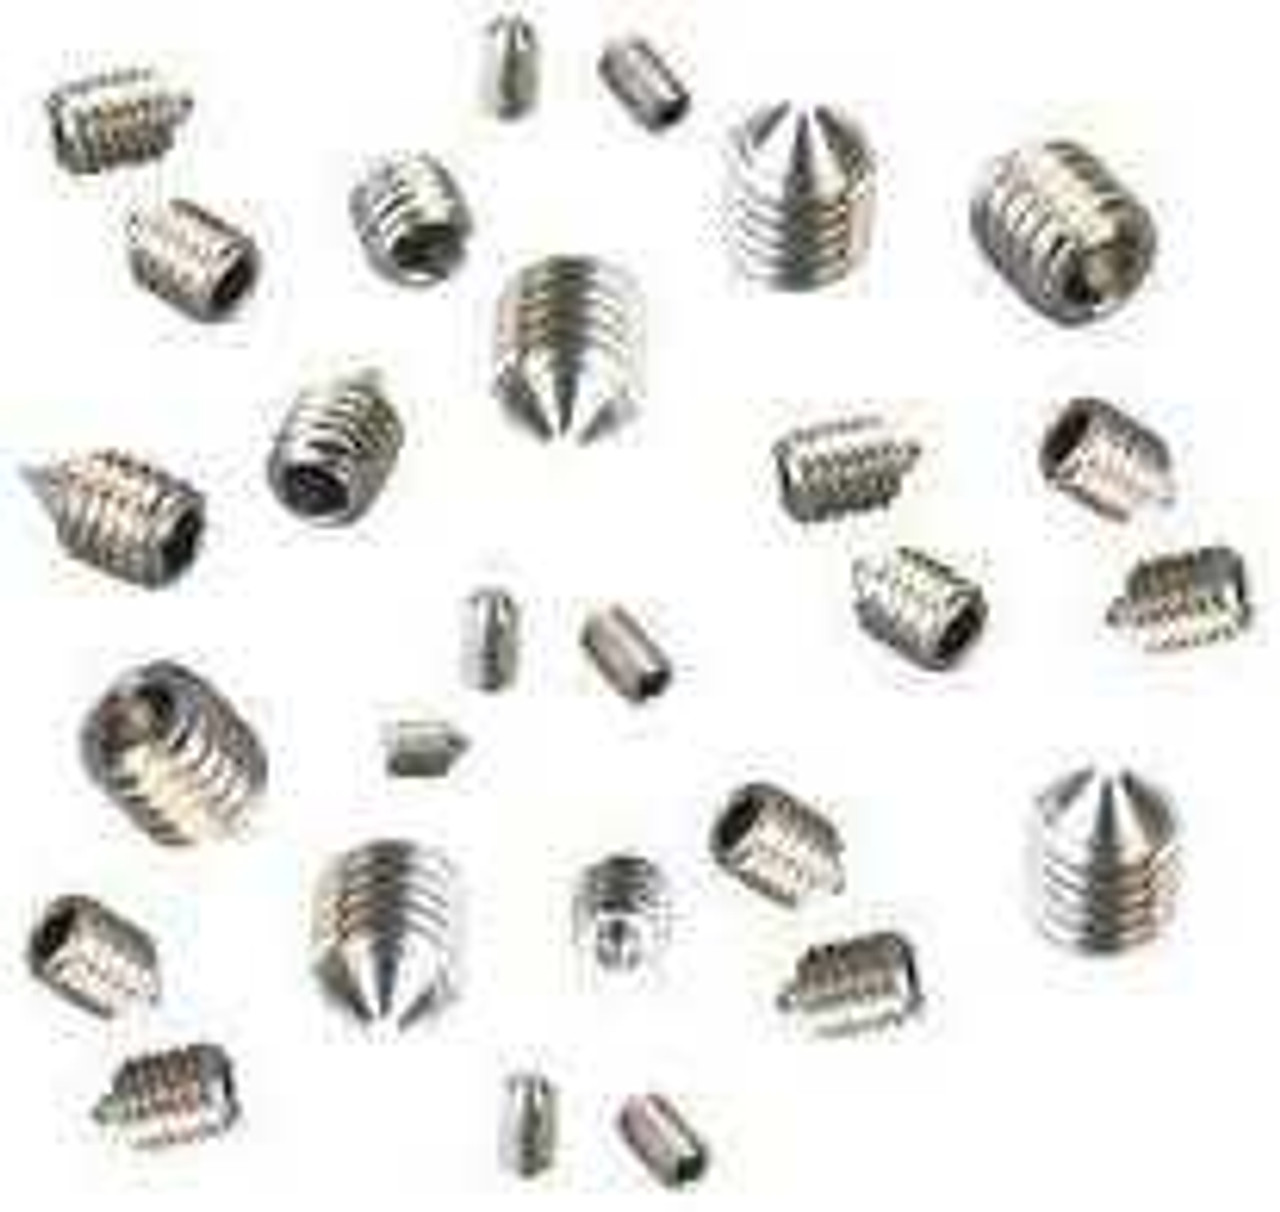 Grub screws metric cone point 10 X M3,M4,M5 & M6 x 6mm Socket Allen Key Grub Screw Free UK Delivery